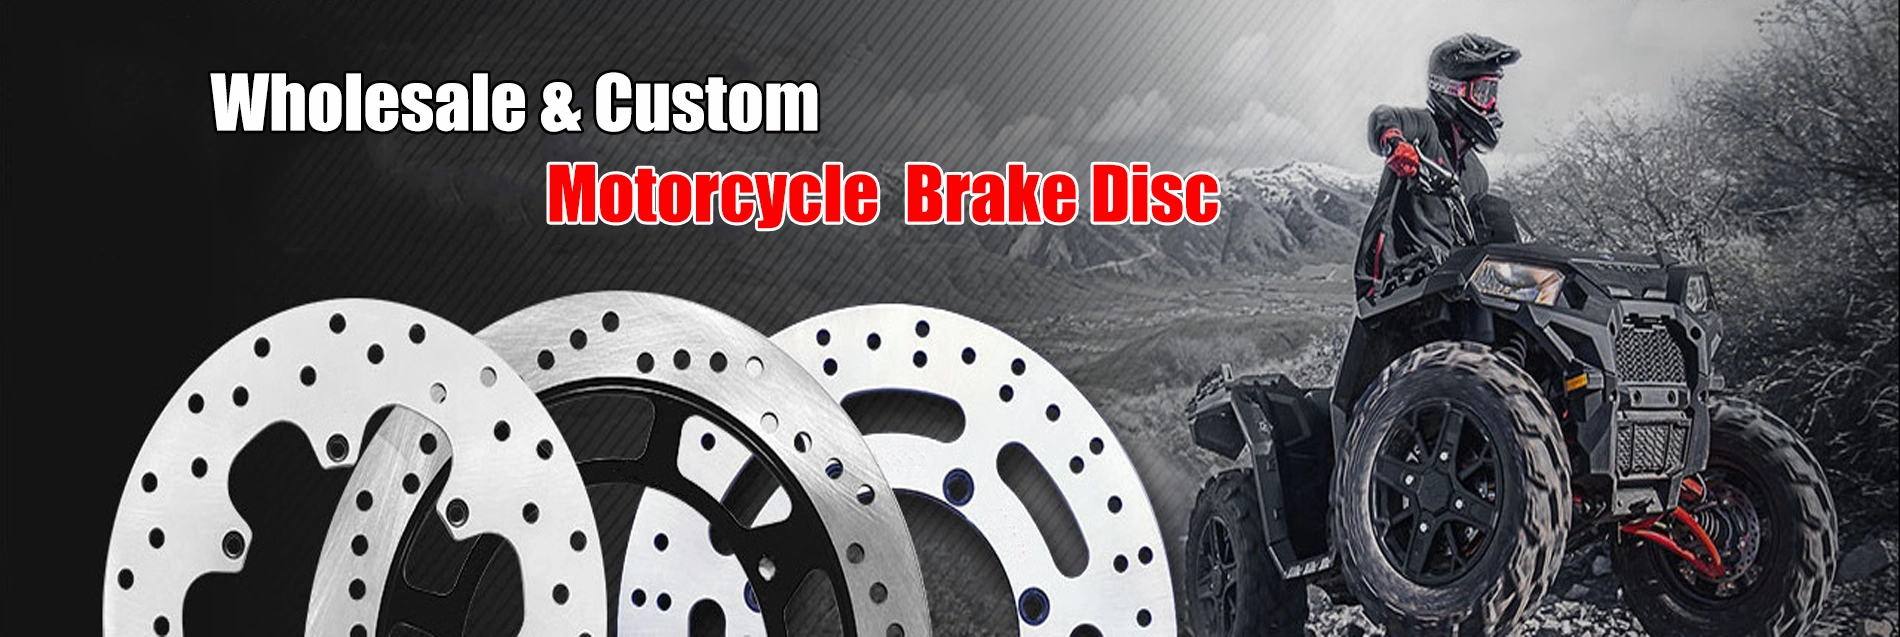 Custom motorcycle 220mm rear brake disc for Kawasaki